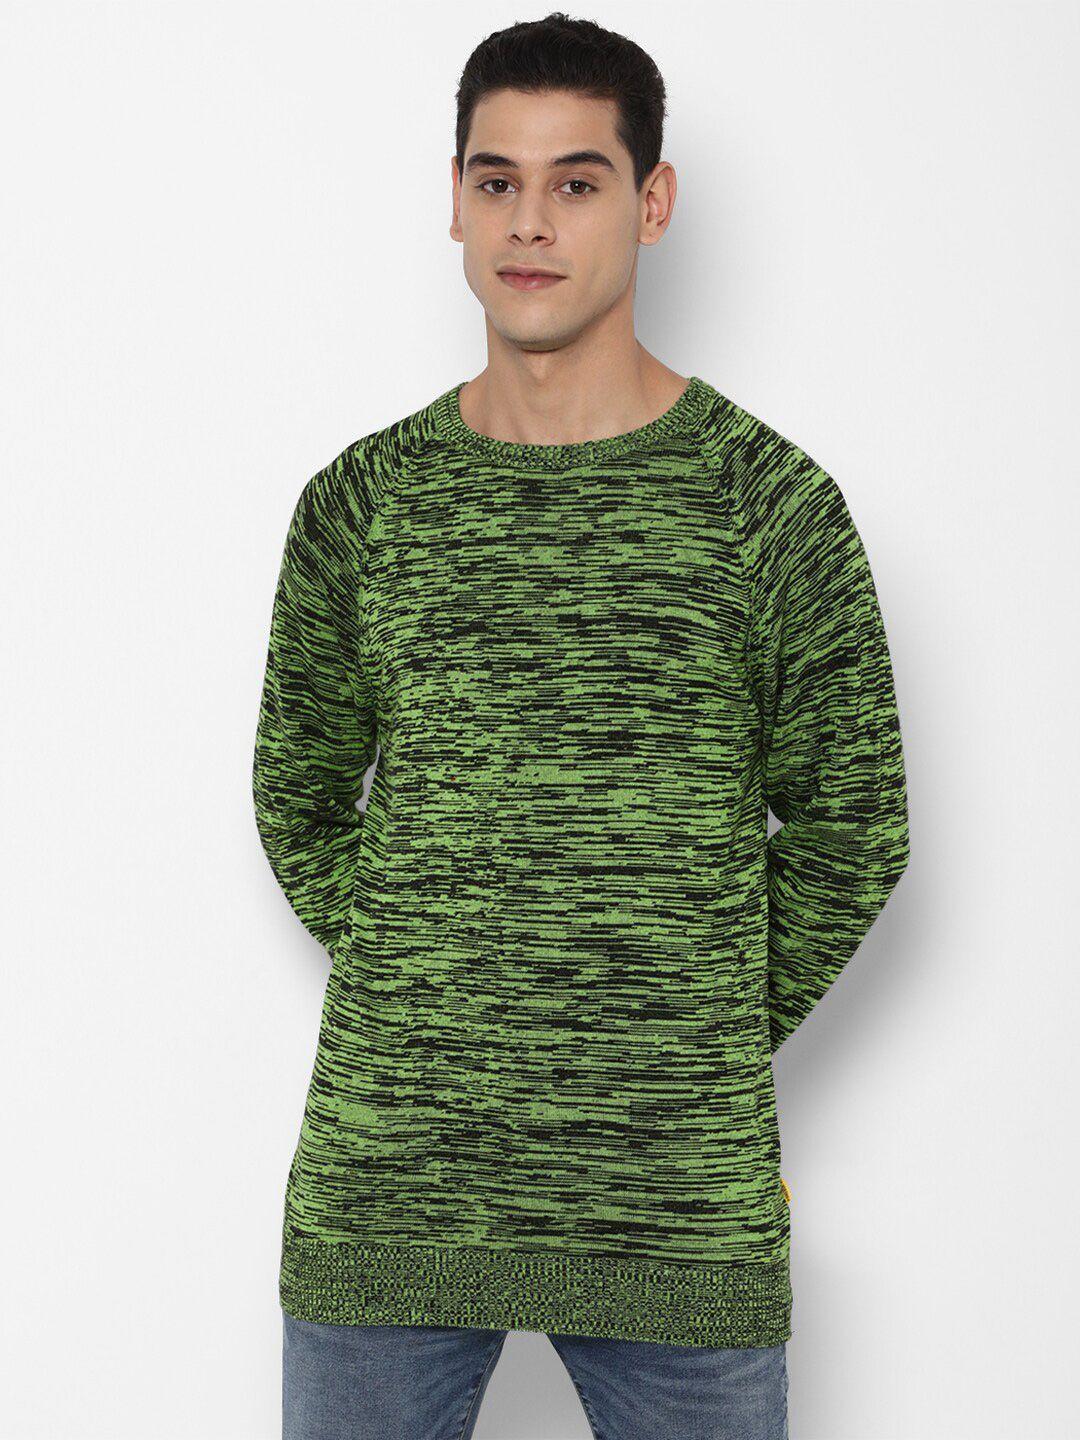 forever-21-men-green-&-black-heathered-knit-pullover